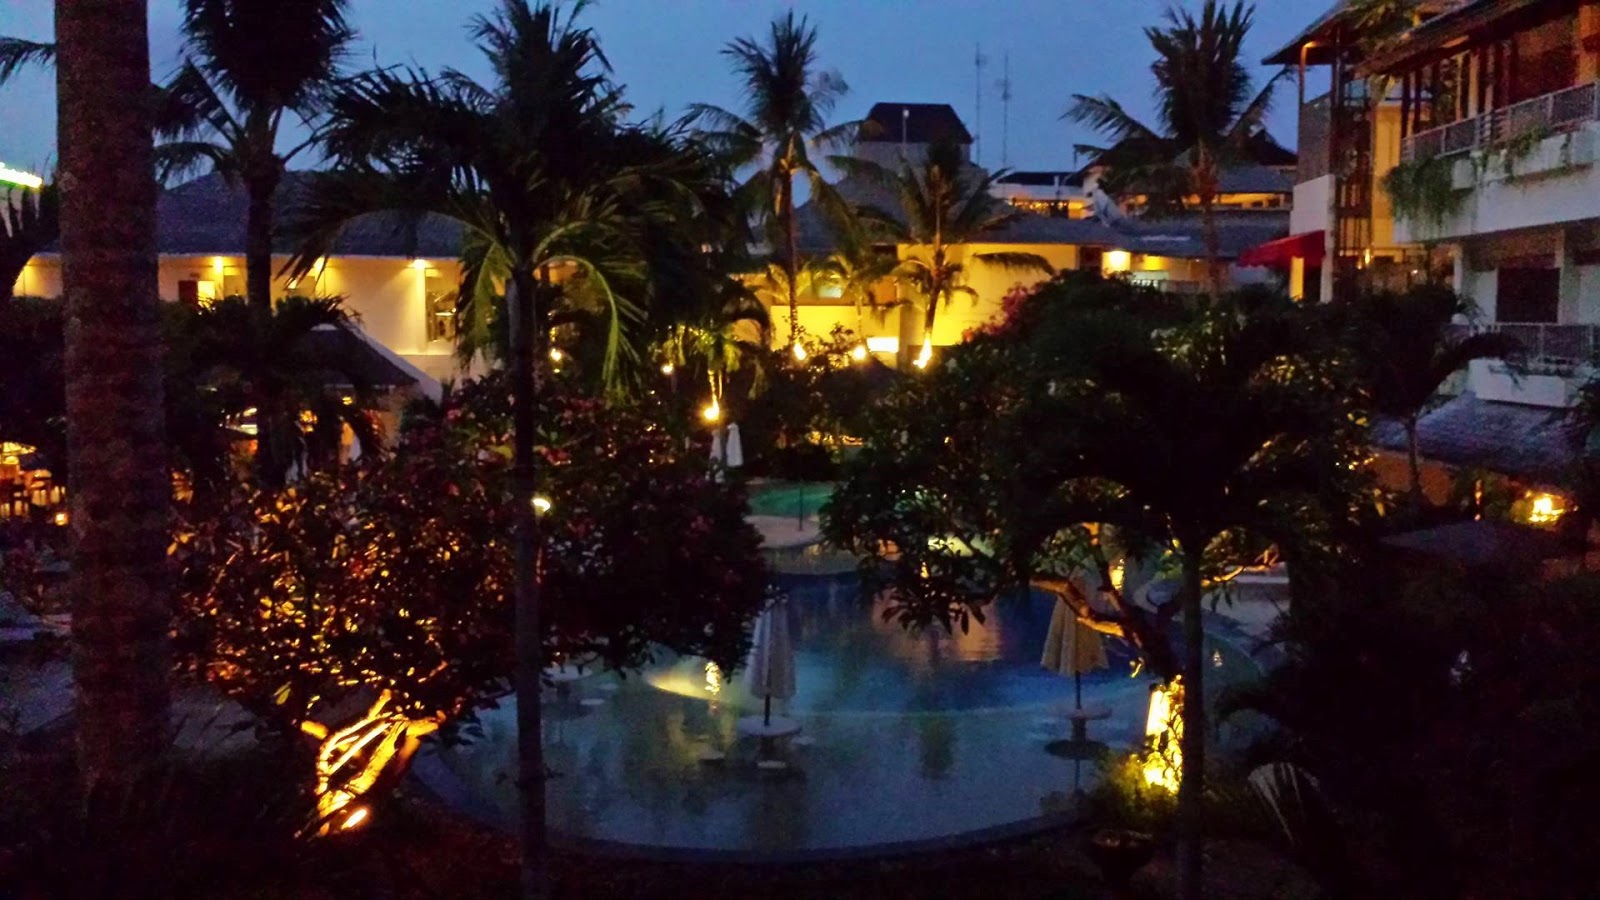  Sublime  stay at The Breezes Bali  Resort Spa Krysti Jaims